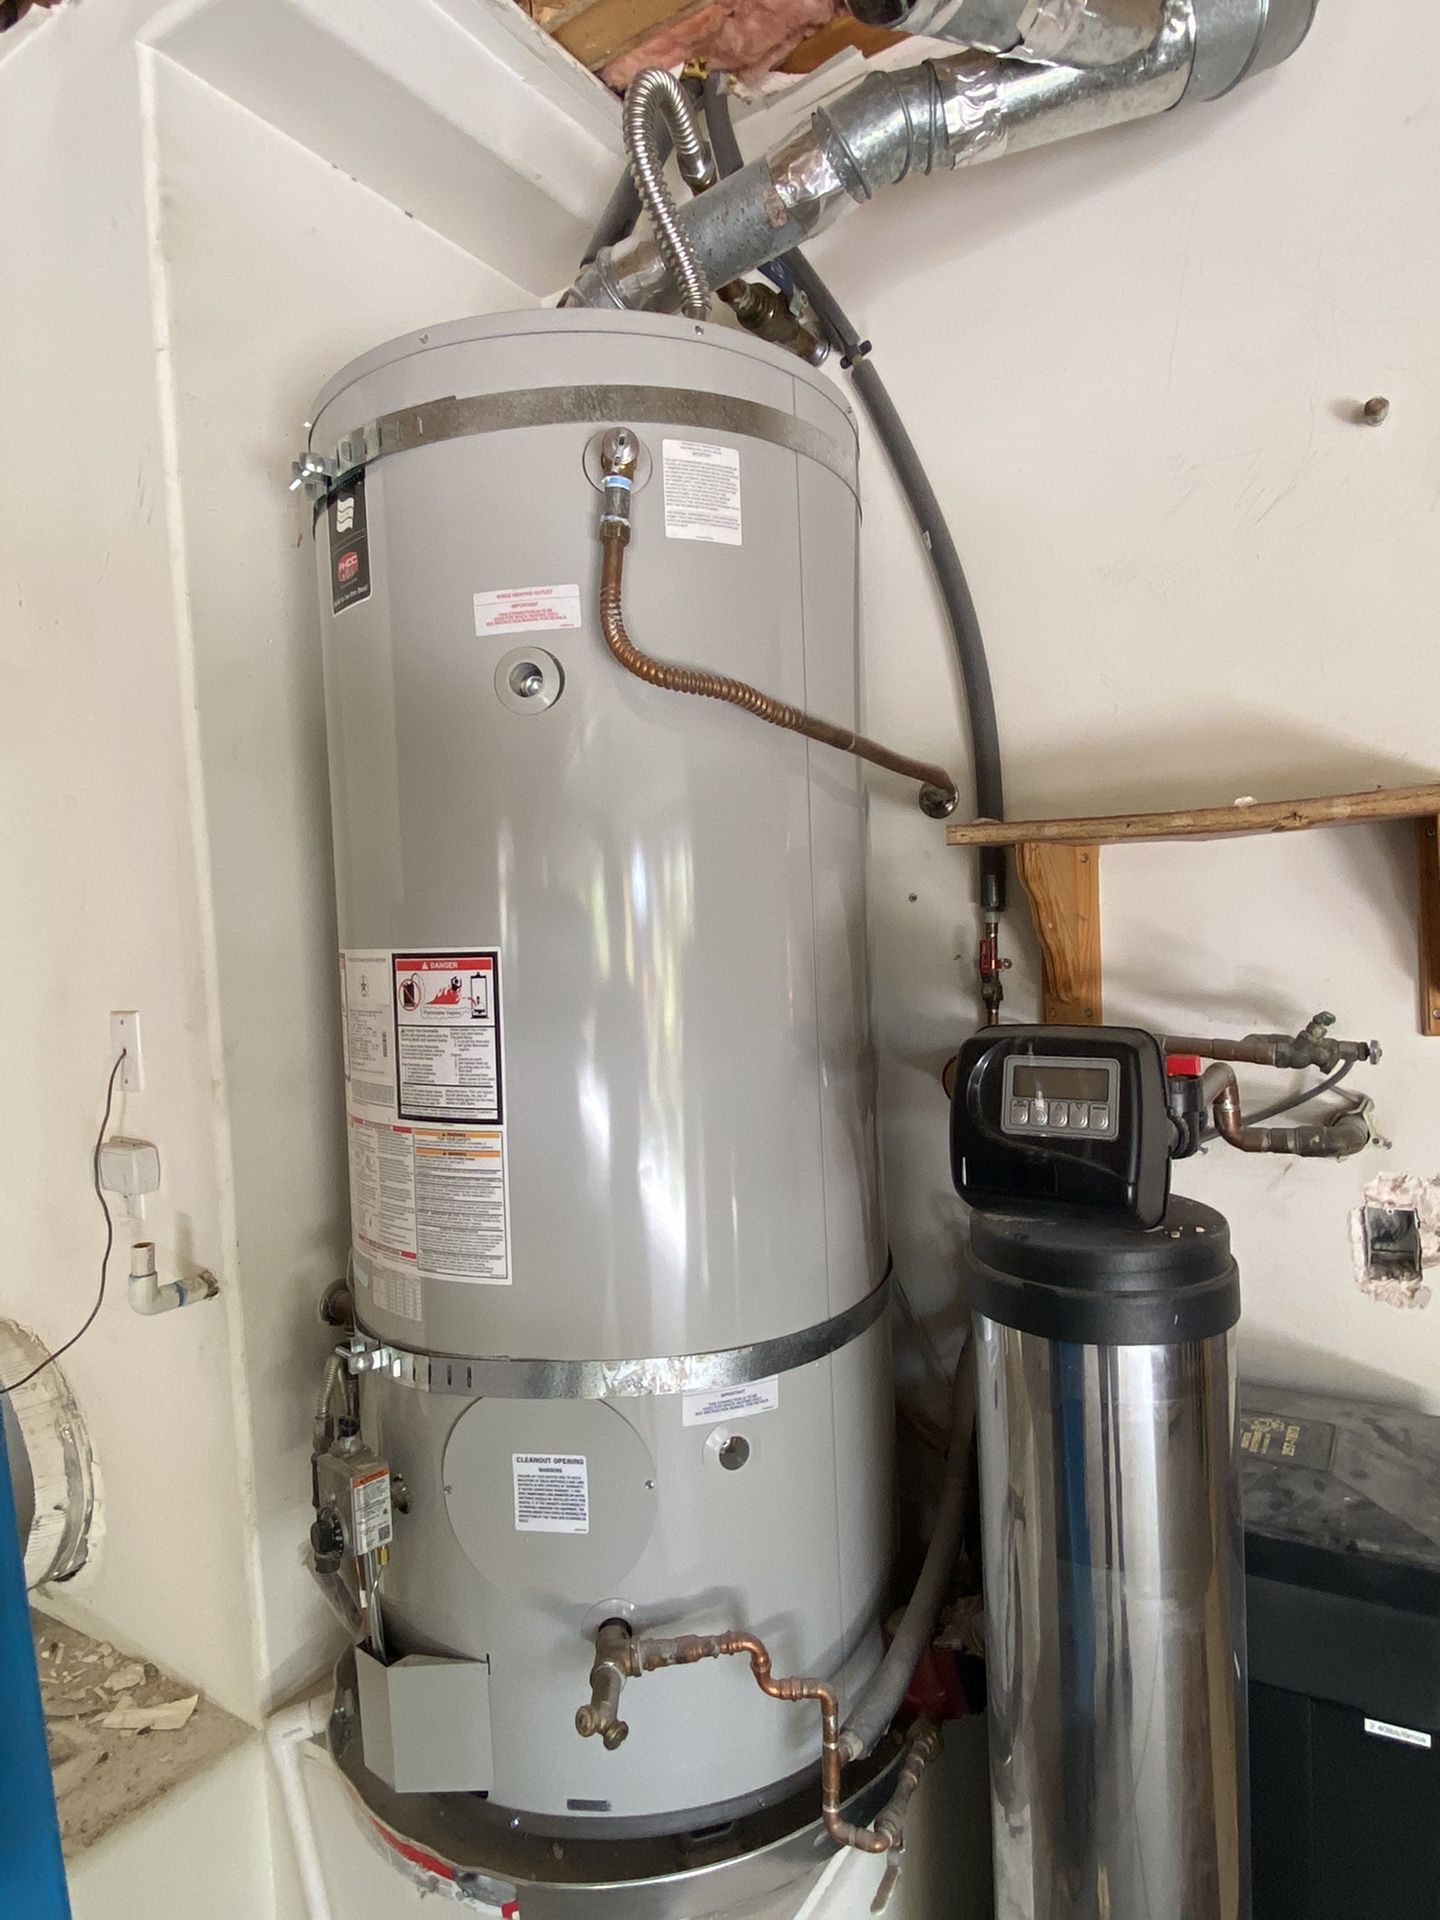 Bradford White 100 gallons water heater